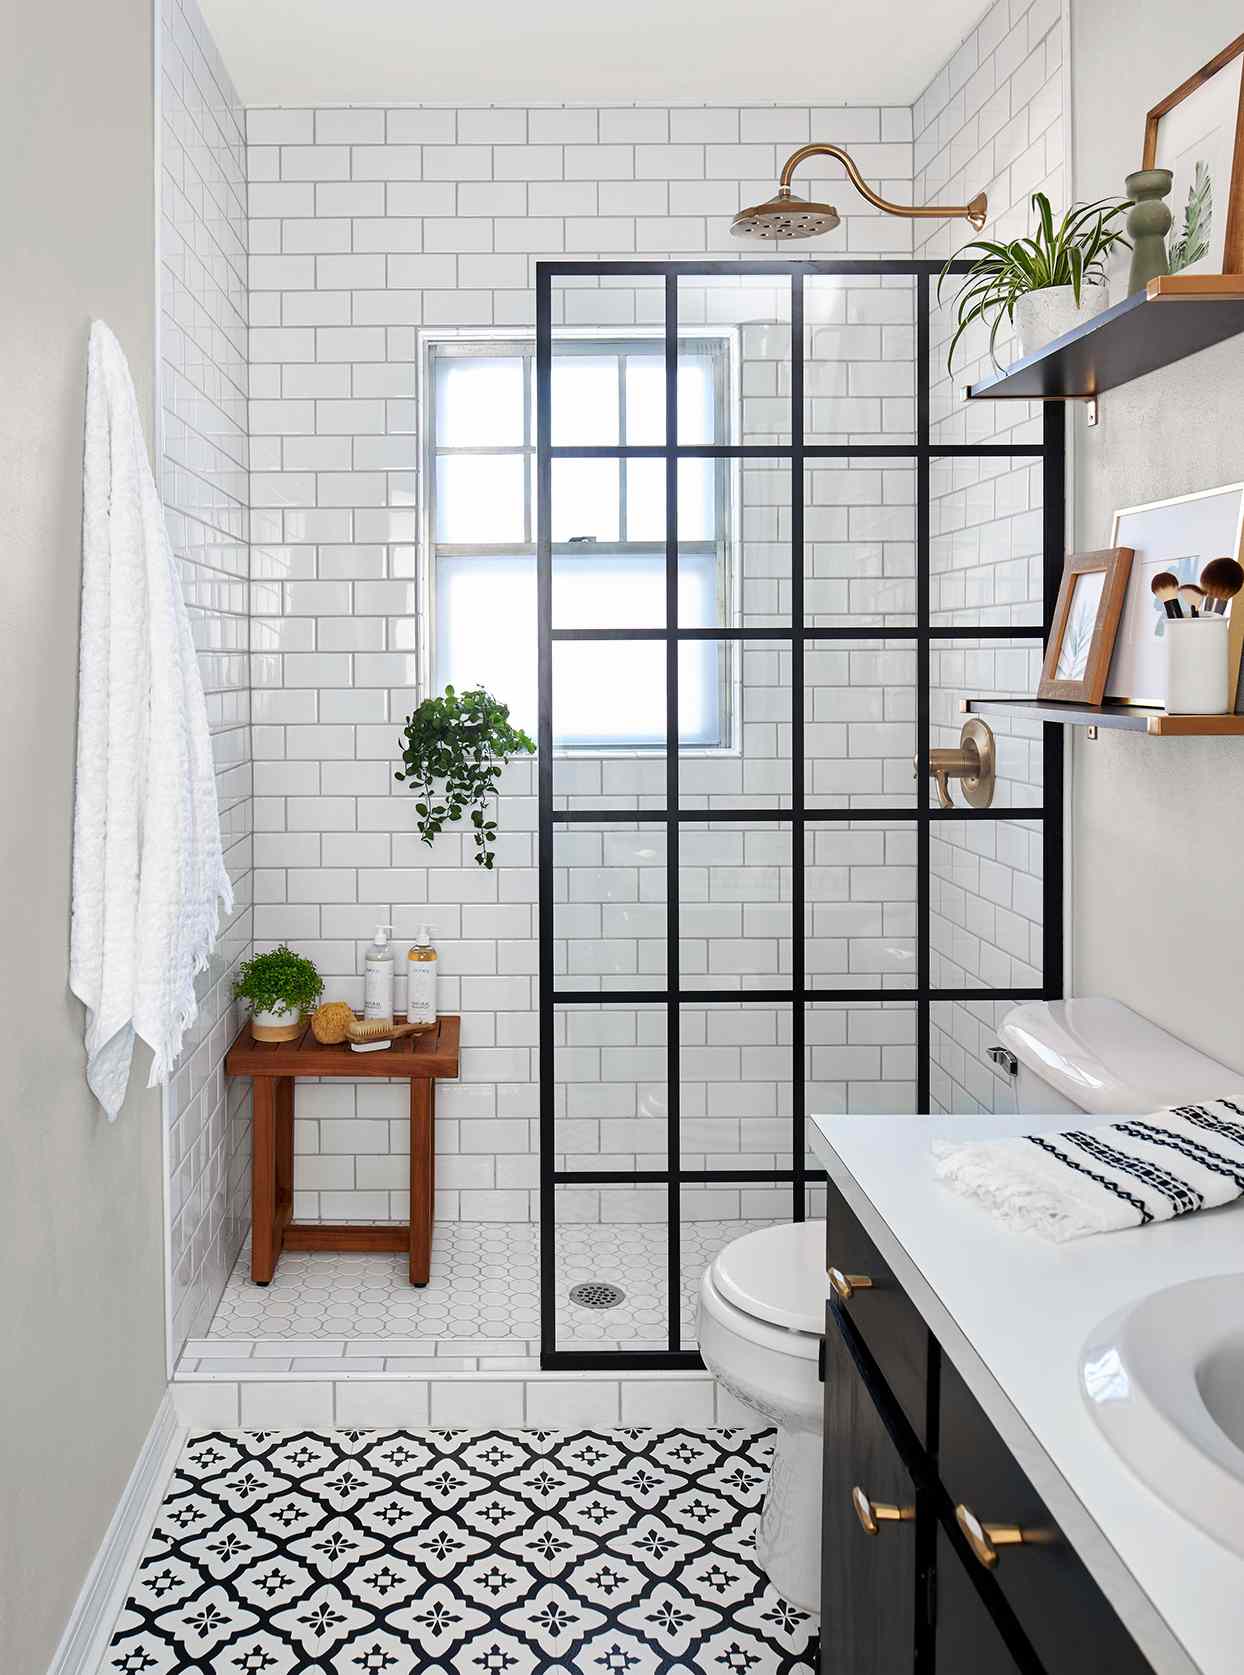 Small Bathroom Remodels That Showcase Stylish, Budget-Friendly Ideas |  Better Homes & Gardens